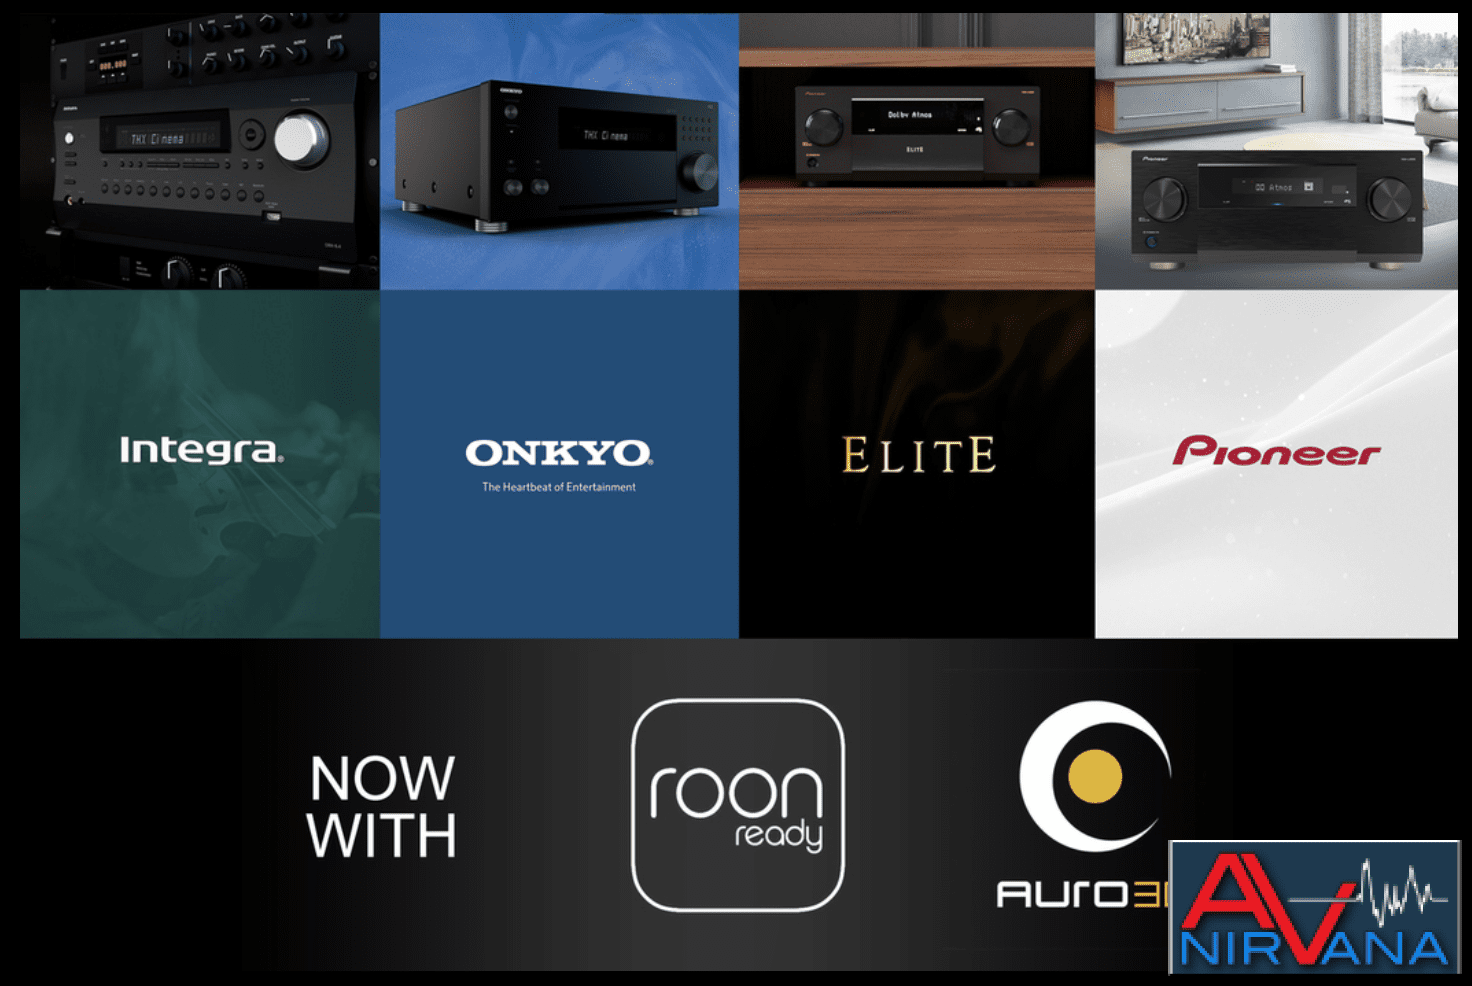 Premium Audio Company Pioneer Elite Onkyo Integra Firmware Update